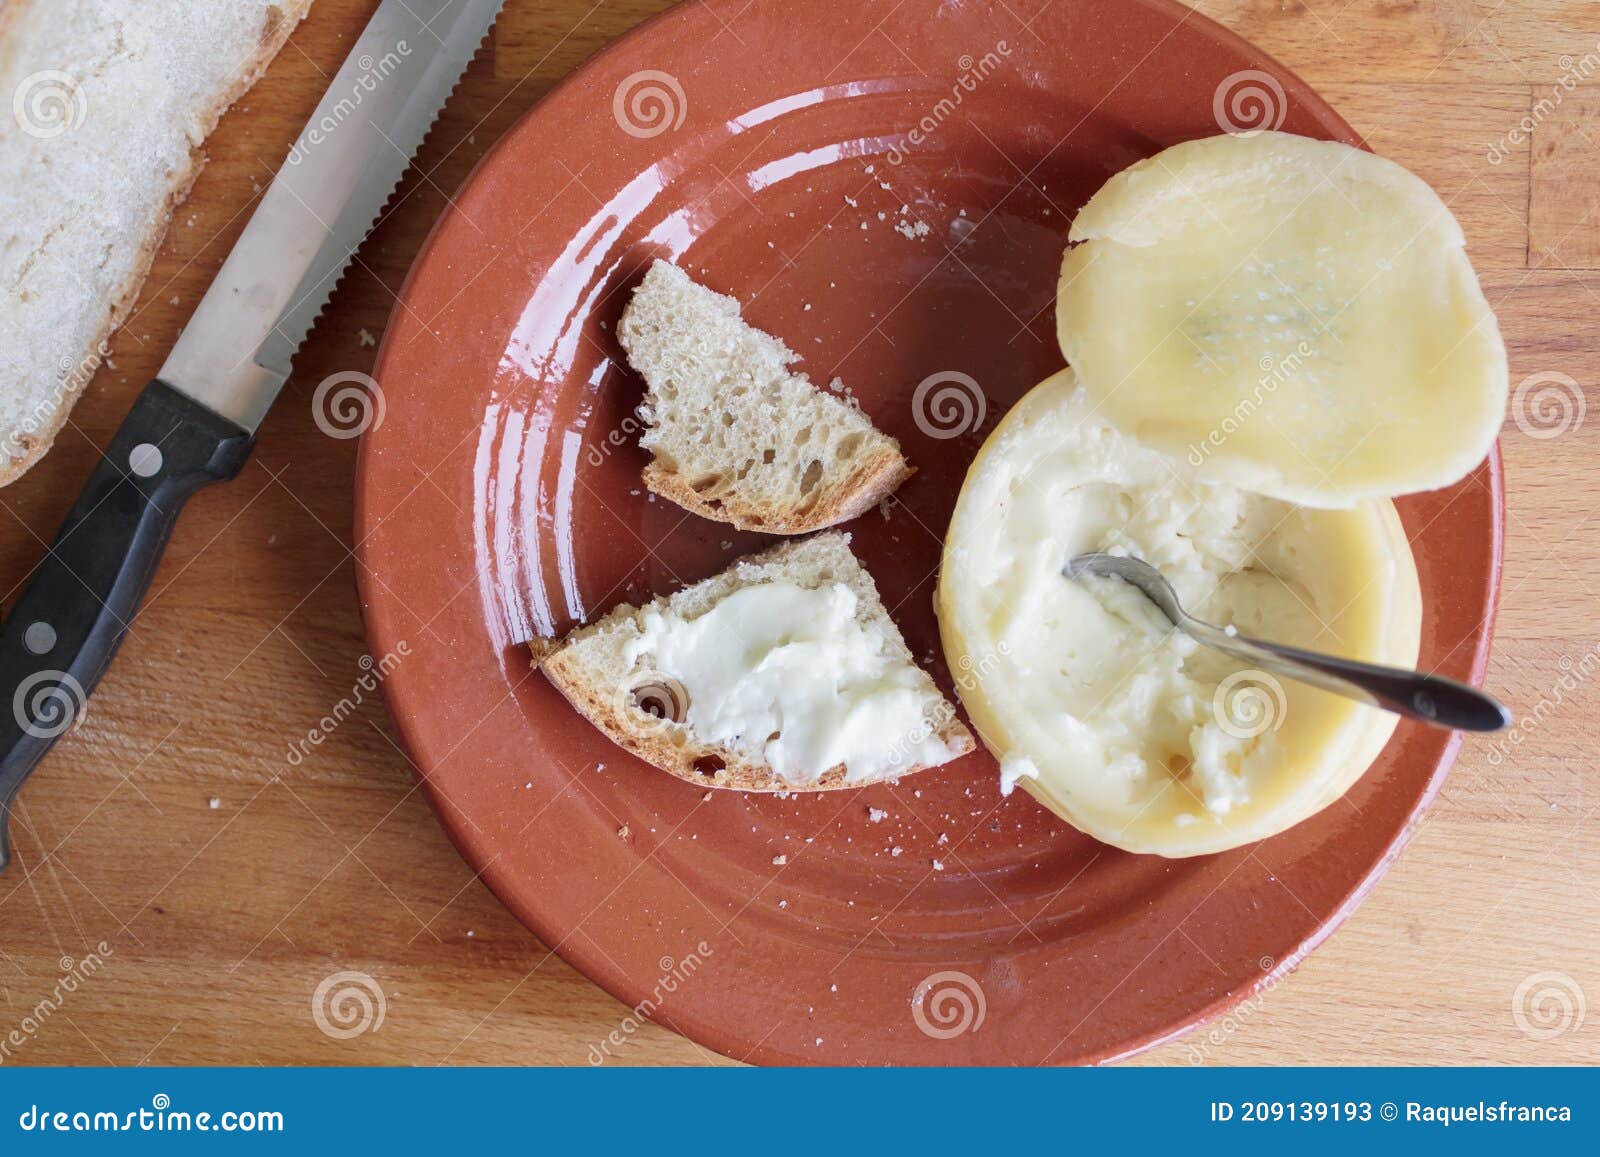 top view of delicious creamy portuguese azeitao cheese with bread